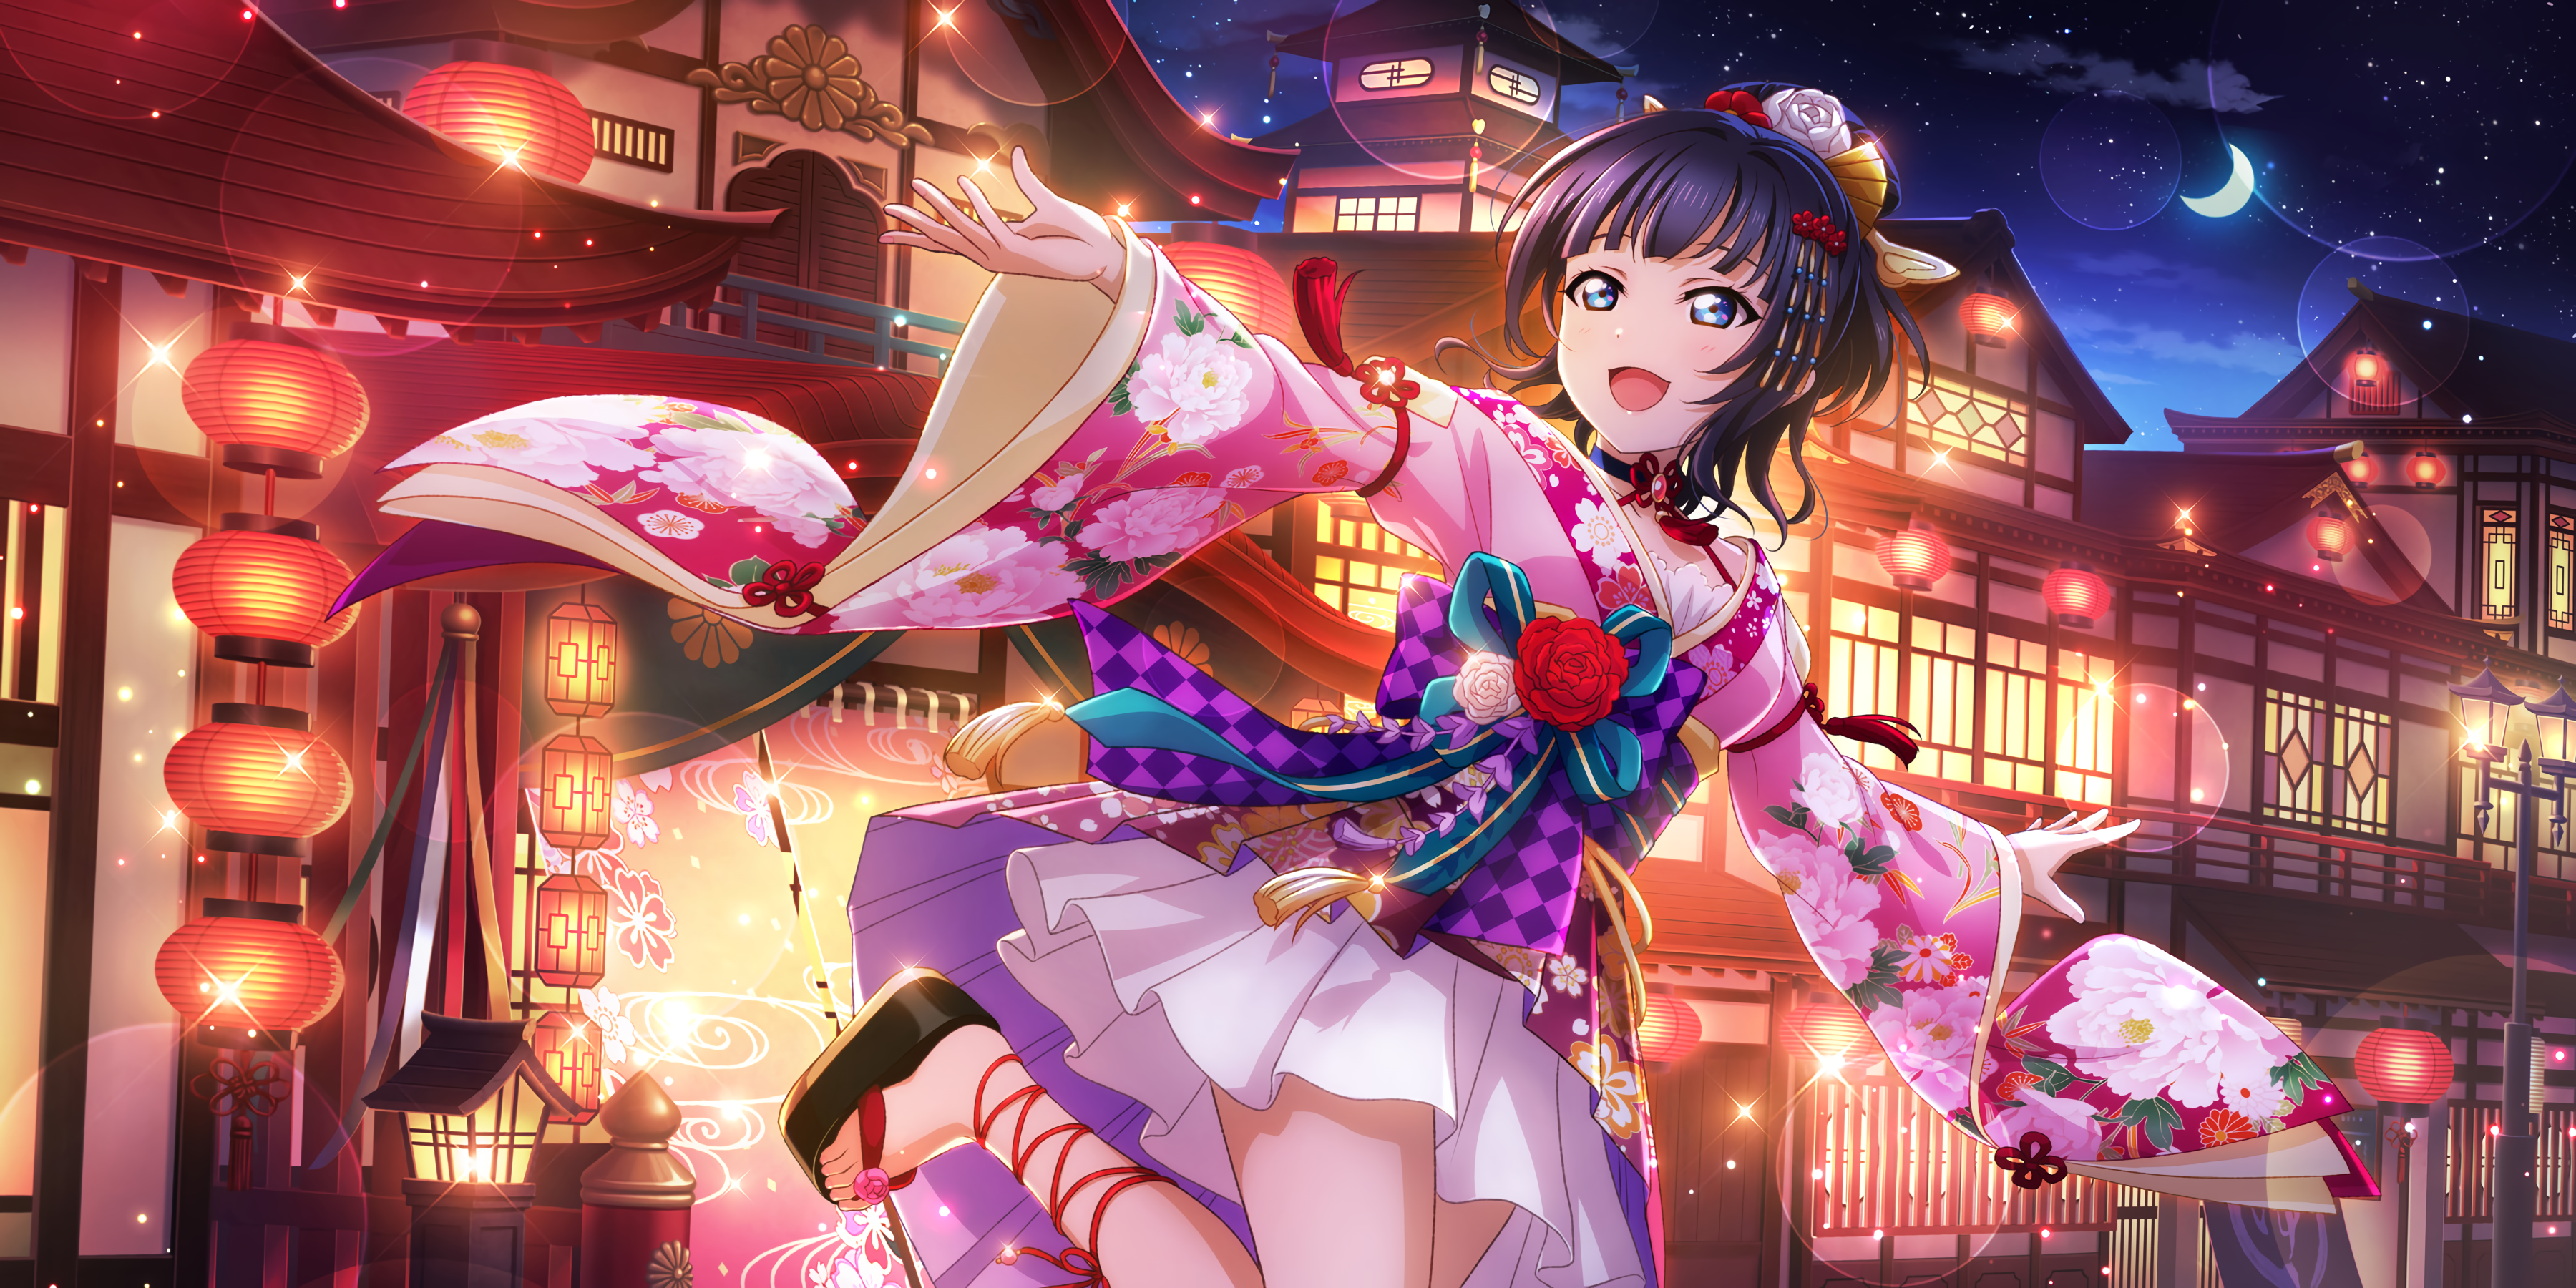 Anime 3600x1800 Asaka Karin Love Live! Sunshine Love Live! anime anime girls kimono night crescent moon Moon stars bubbles lights flowers flower in hair